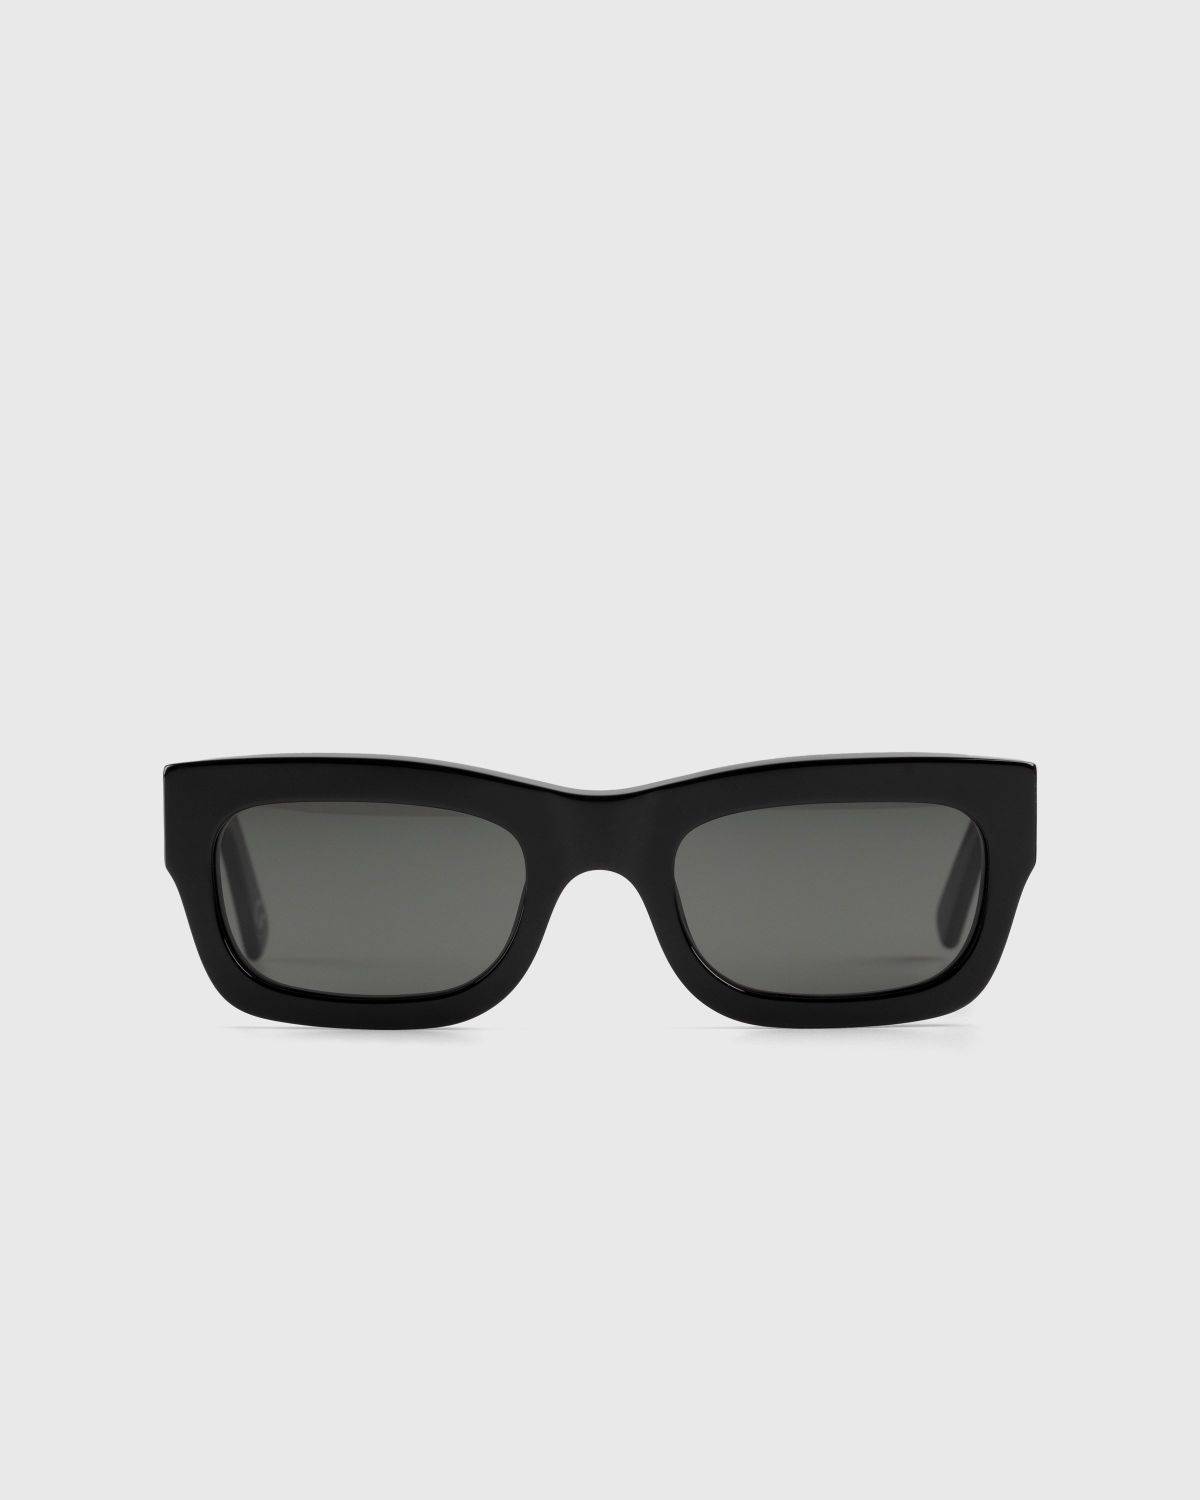 Marni – Kawasan Falls Sunglasses Black - Sunglasses - Black - Image 1